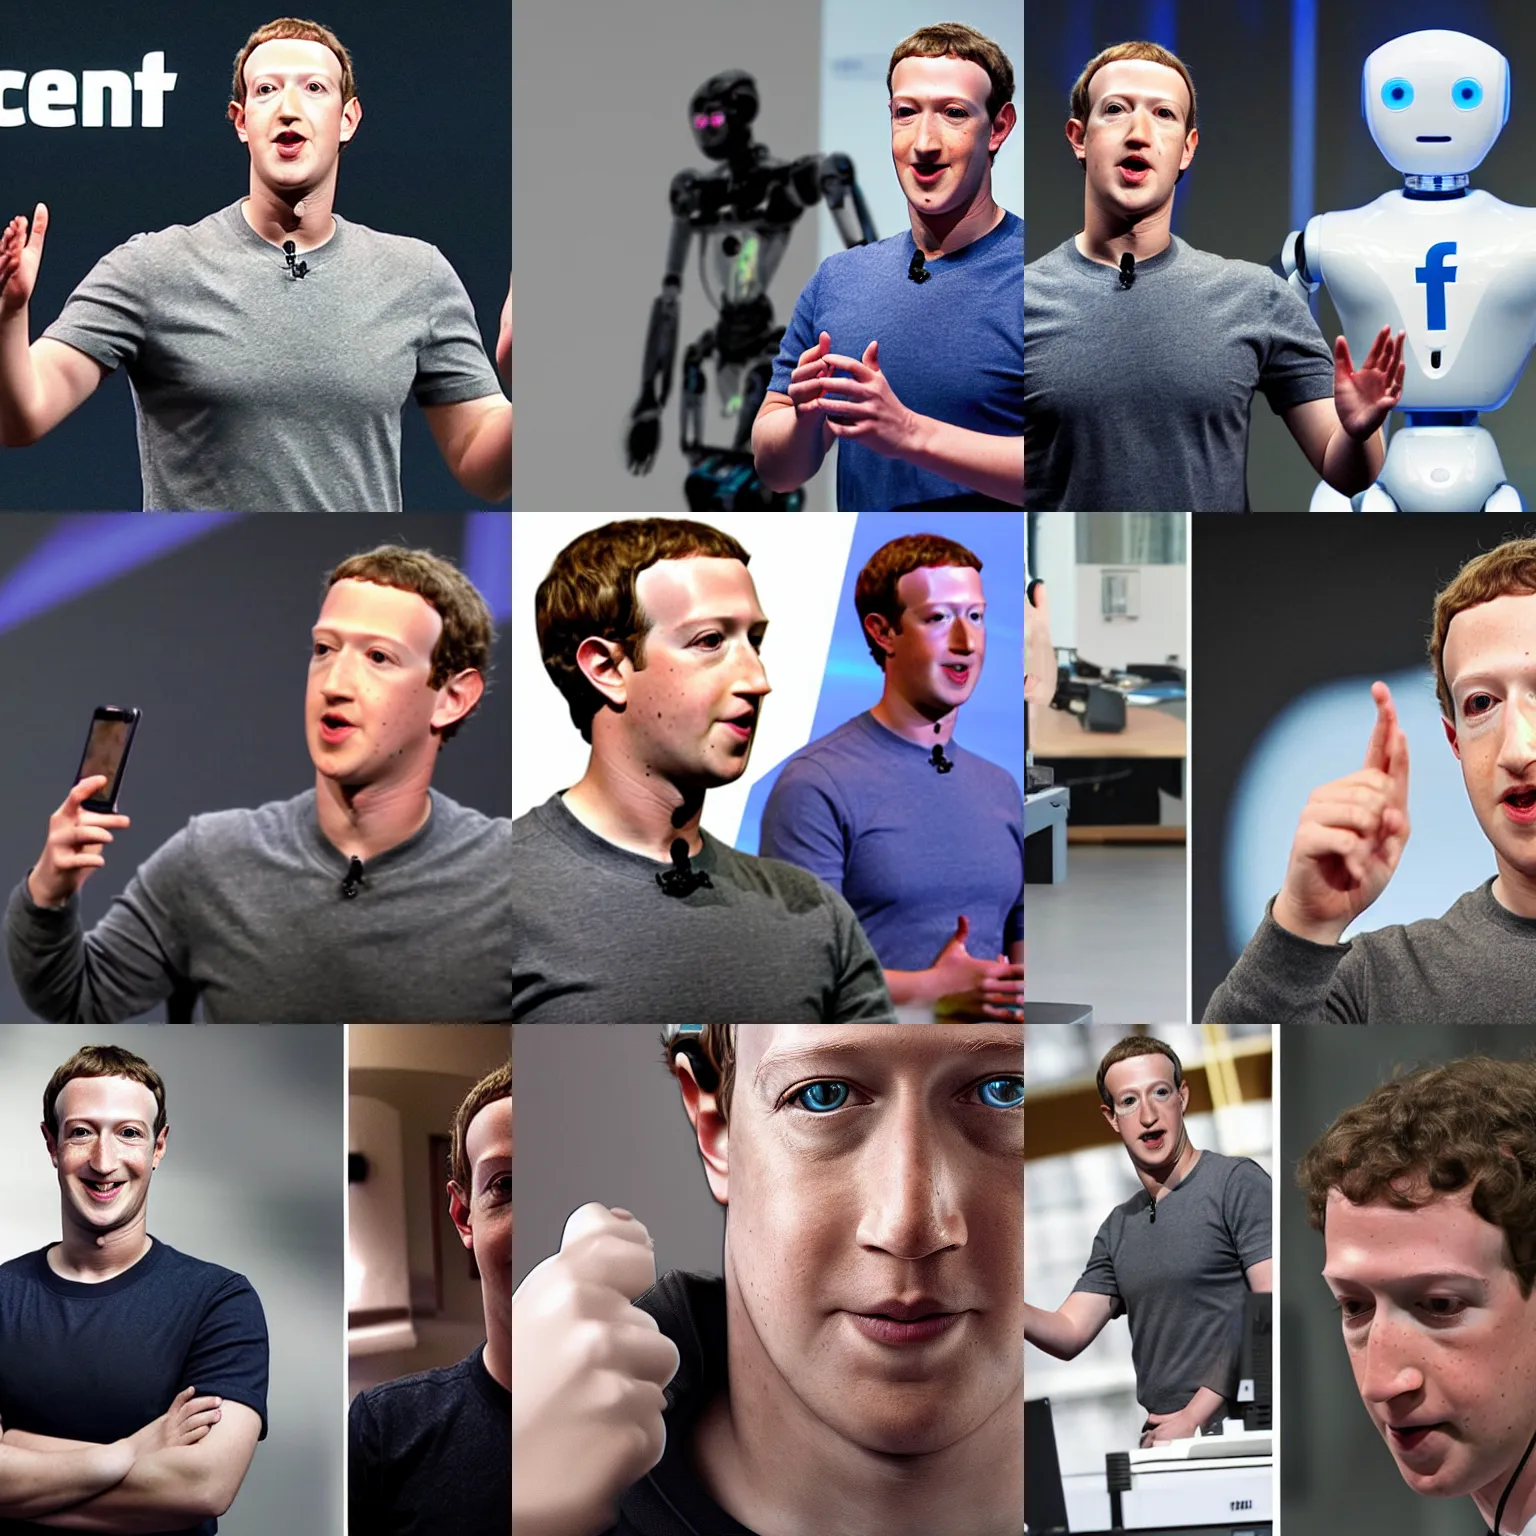 Prompt: facebook ceo mark zuckerberg as a cyborg with robot body